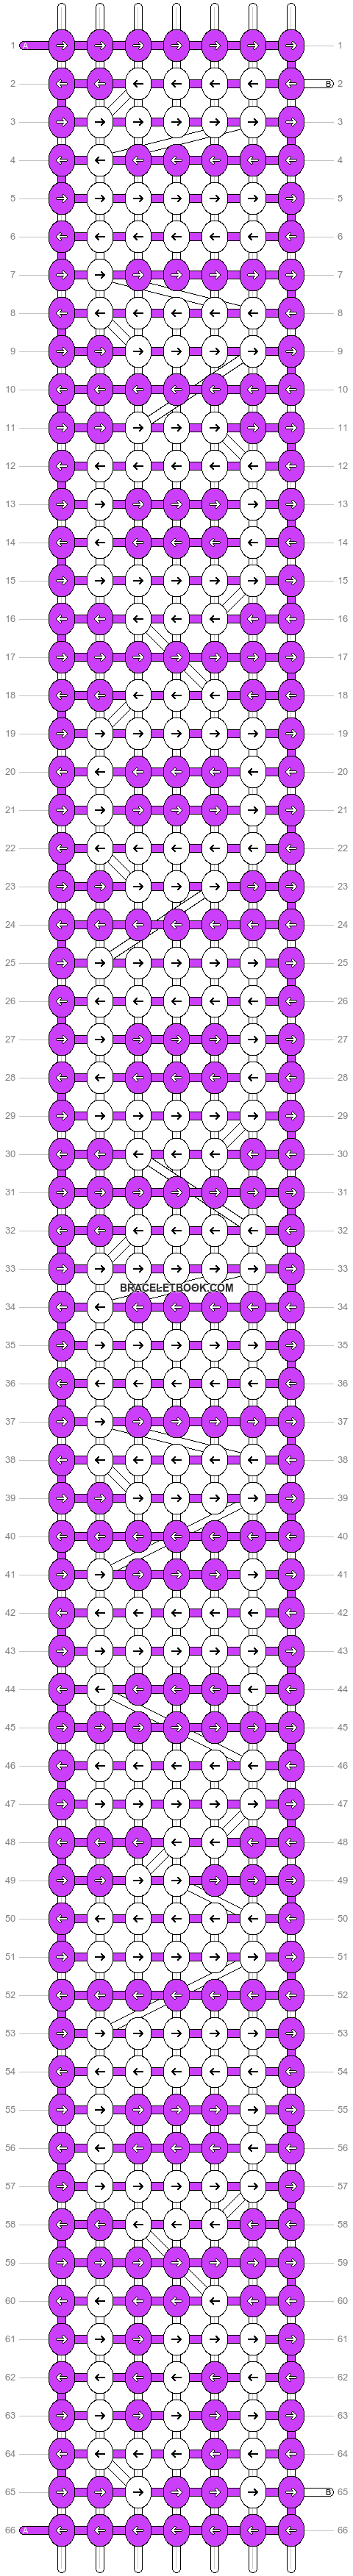 Alpha pattern #6856 variation #31608 pattern